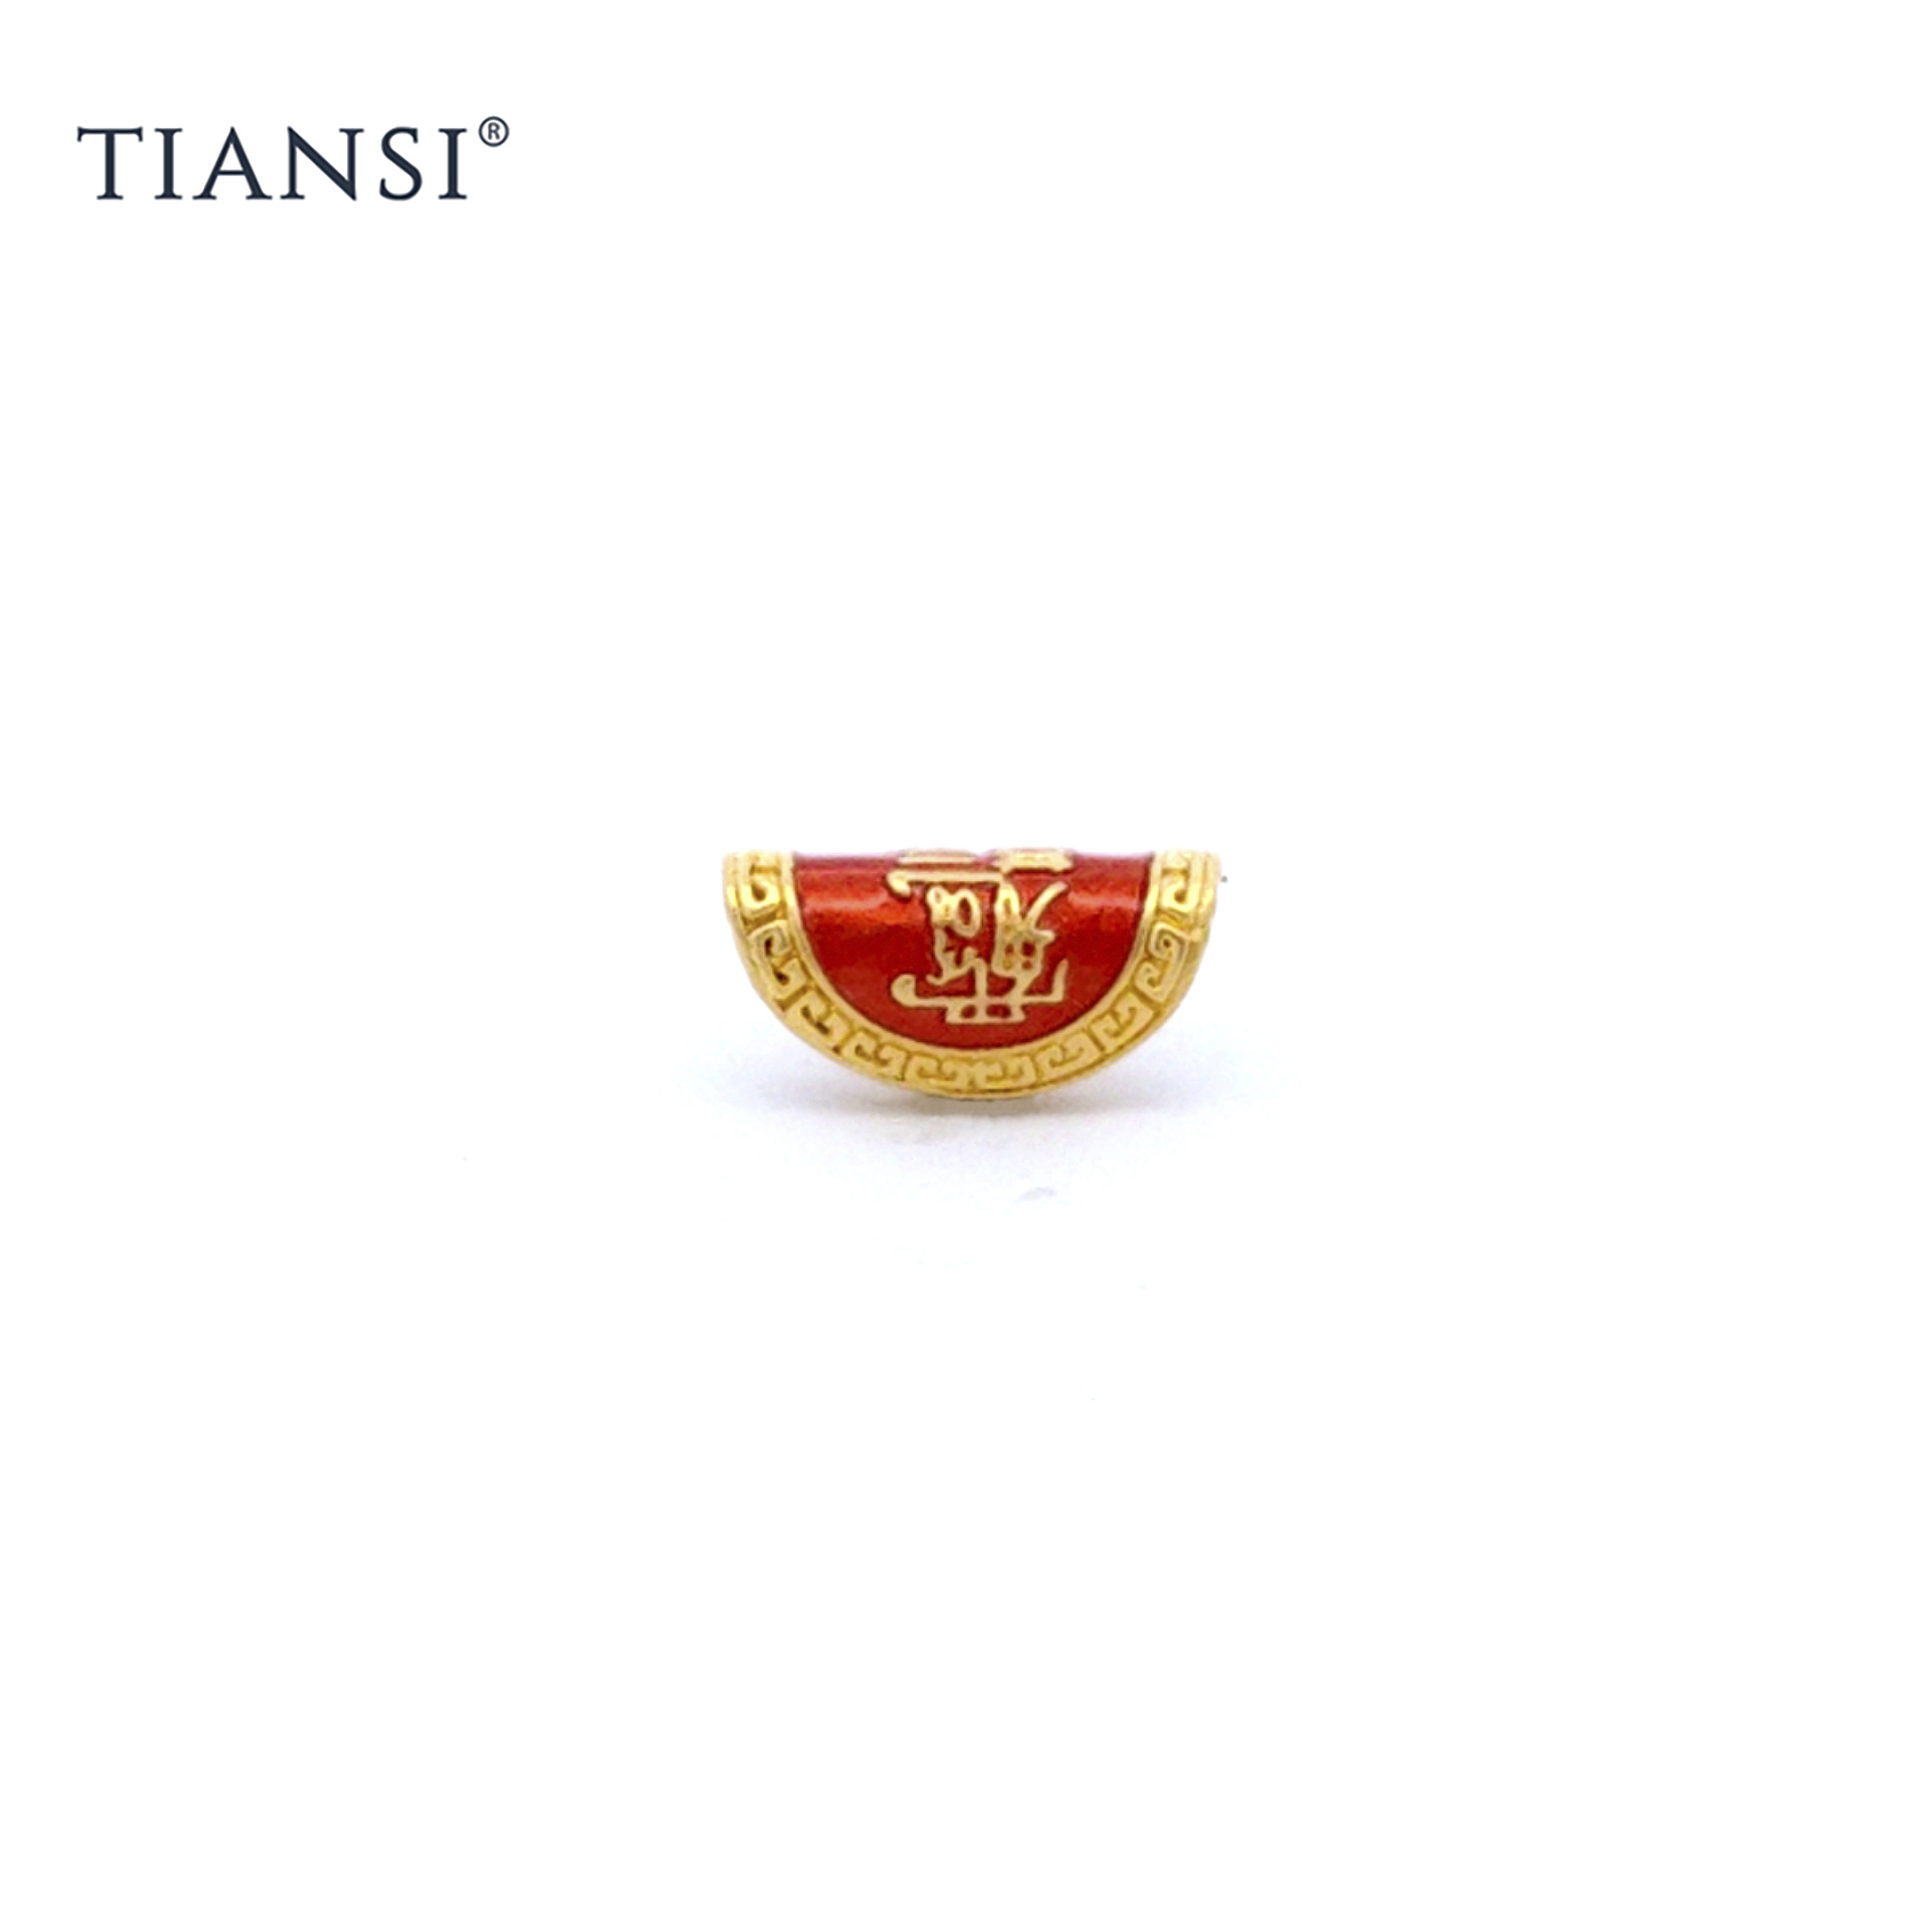 TIANSI 999(24K) Gold Enamel Dumpling Charm 珐琅饺子路路通 Charm Emas